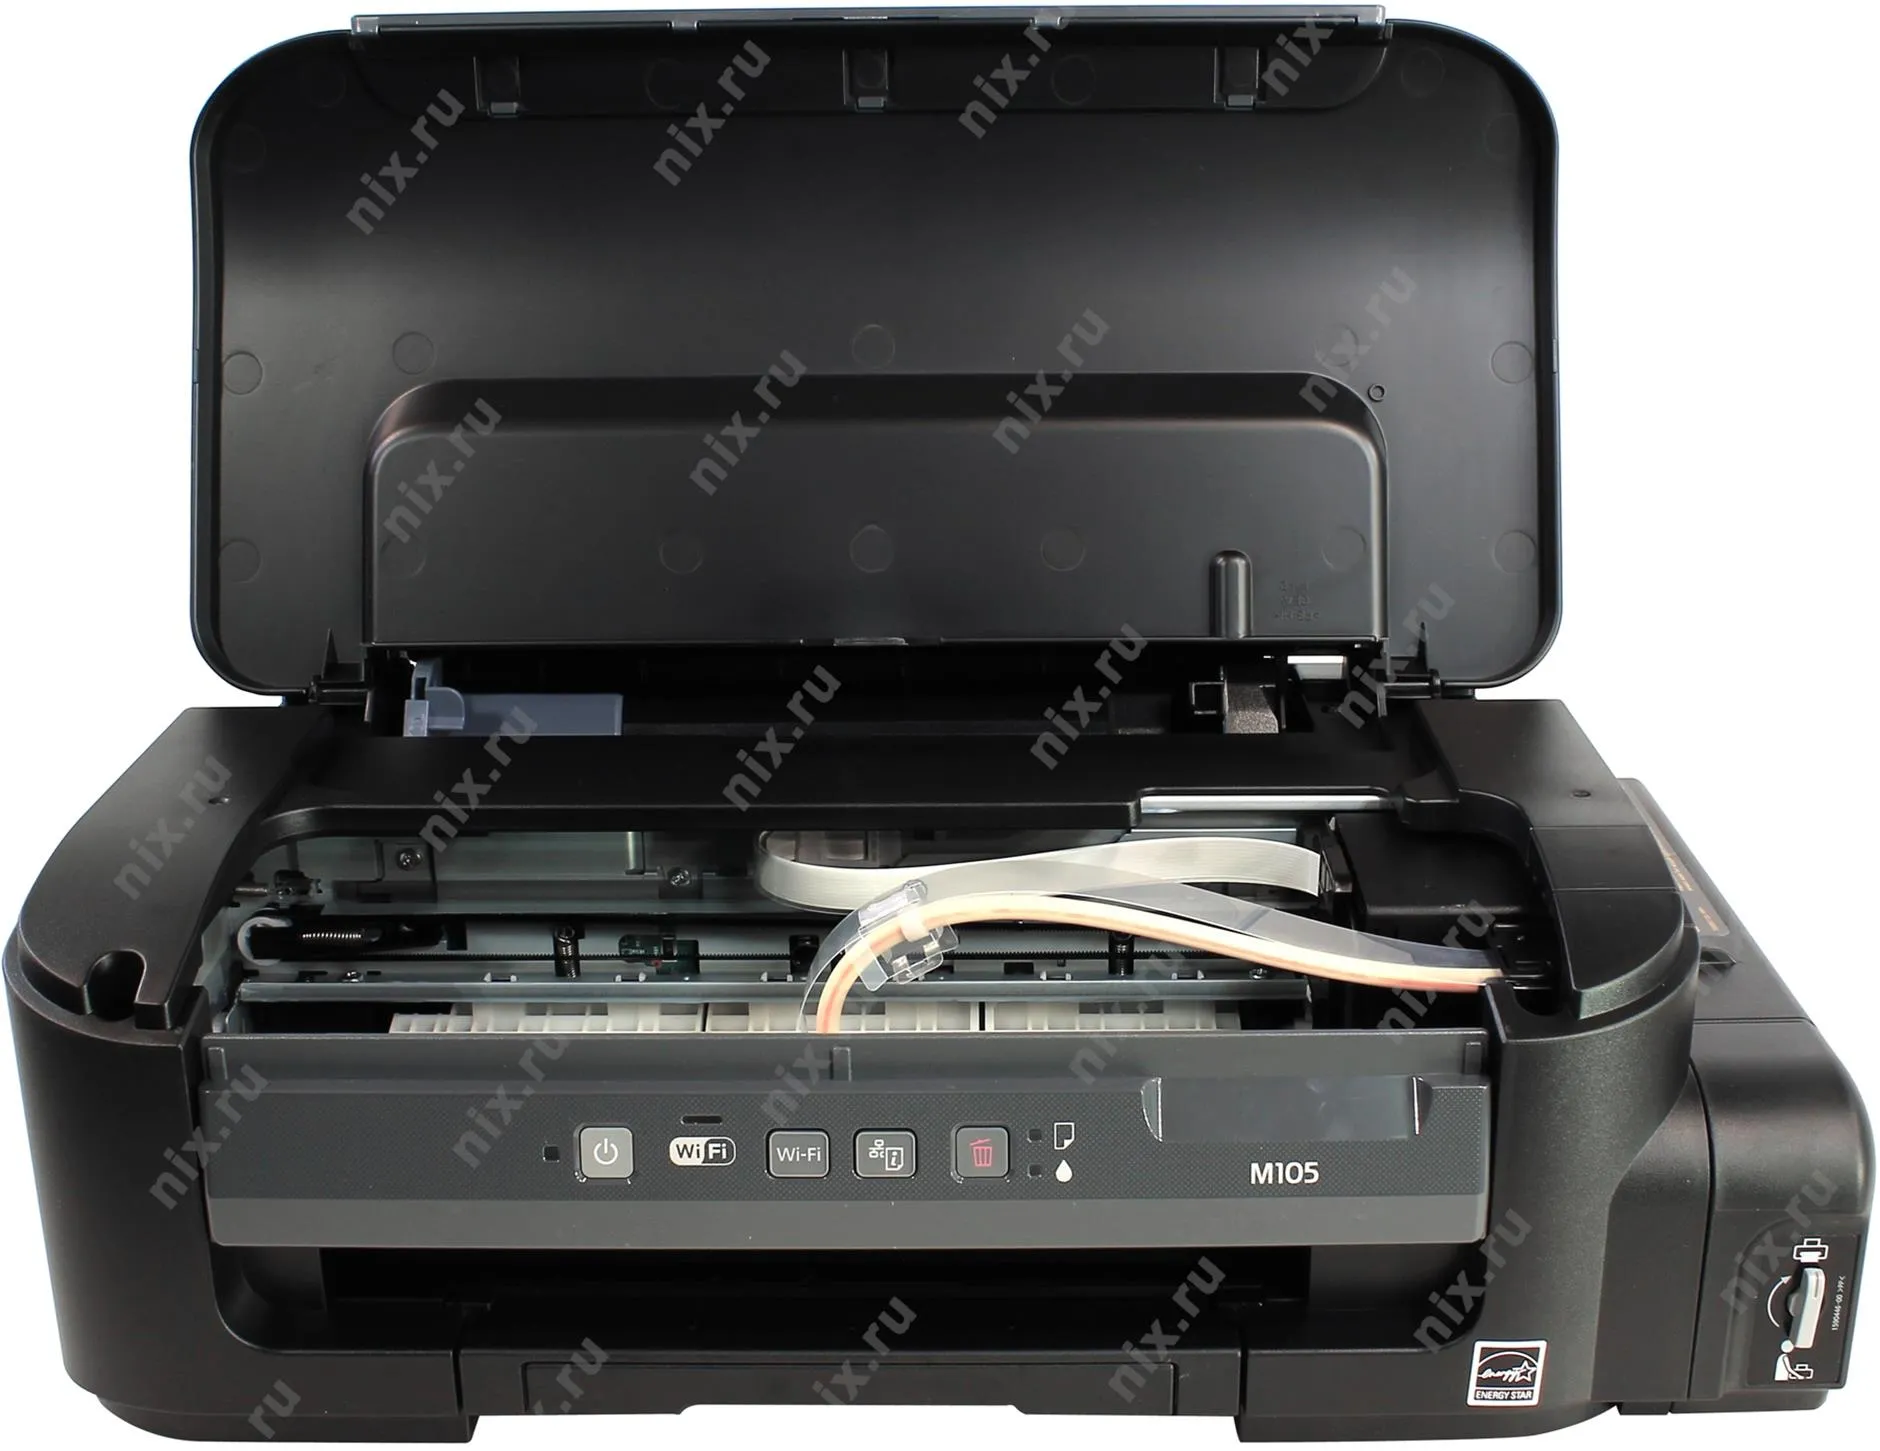 Принтер Epson WorkForce M105 (A4, струйный, 34 стр / мин, 1440x720 dpi, 1 краска, USB2.0, WiFi)#3